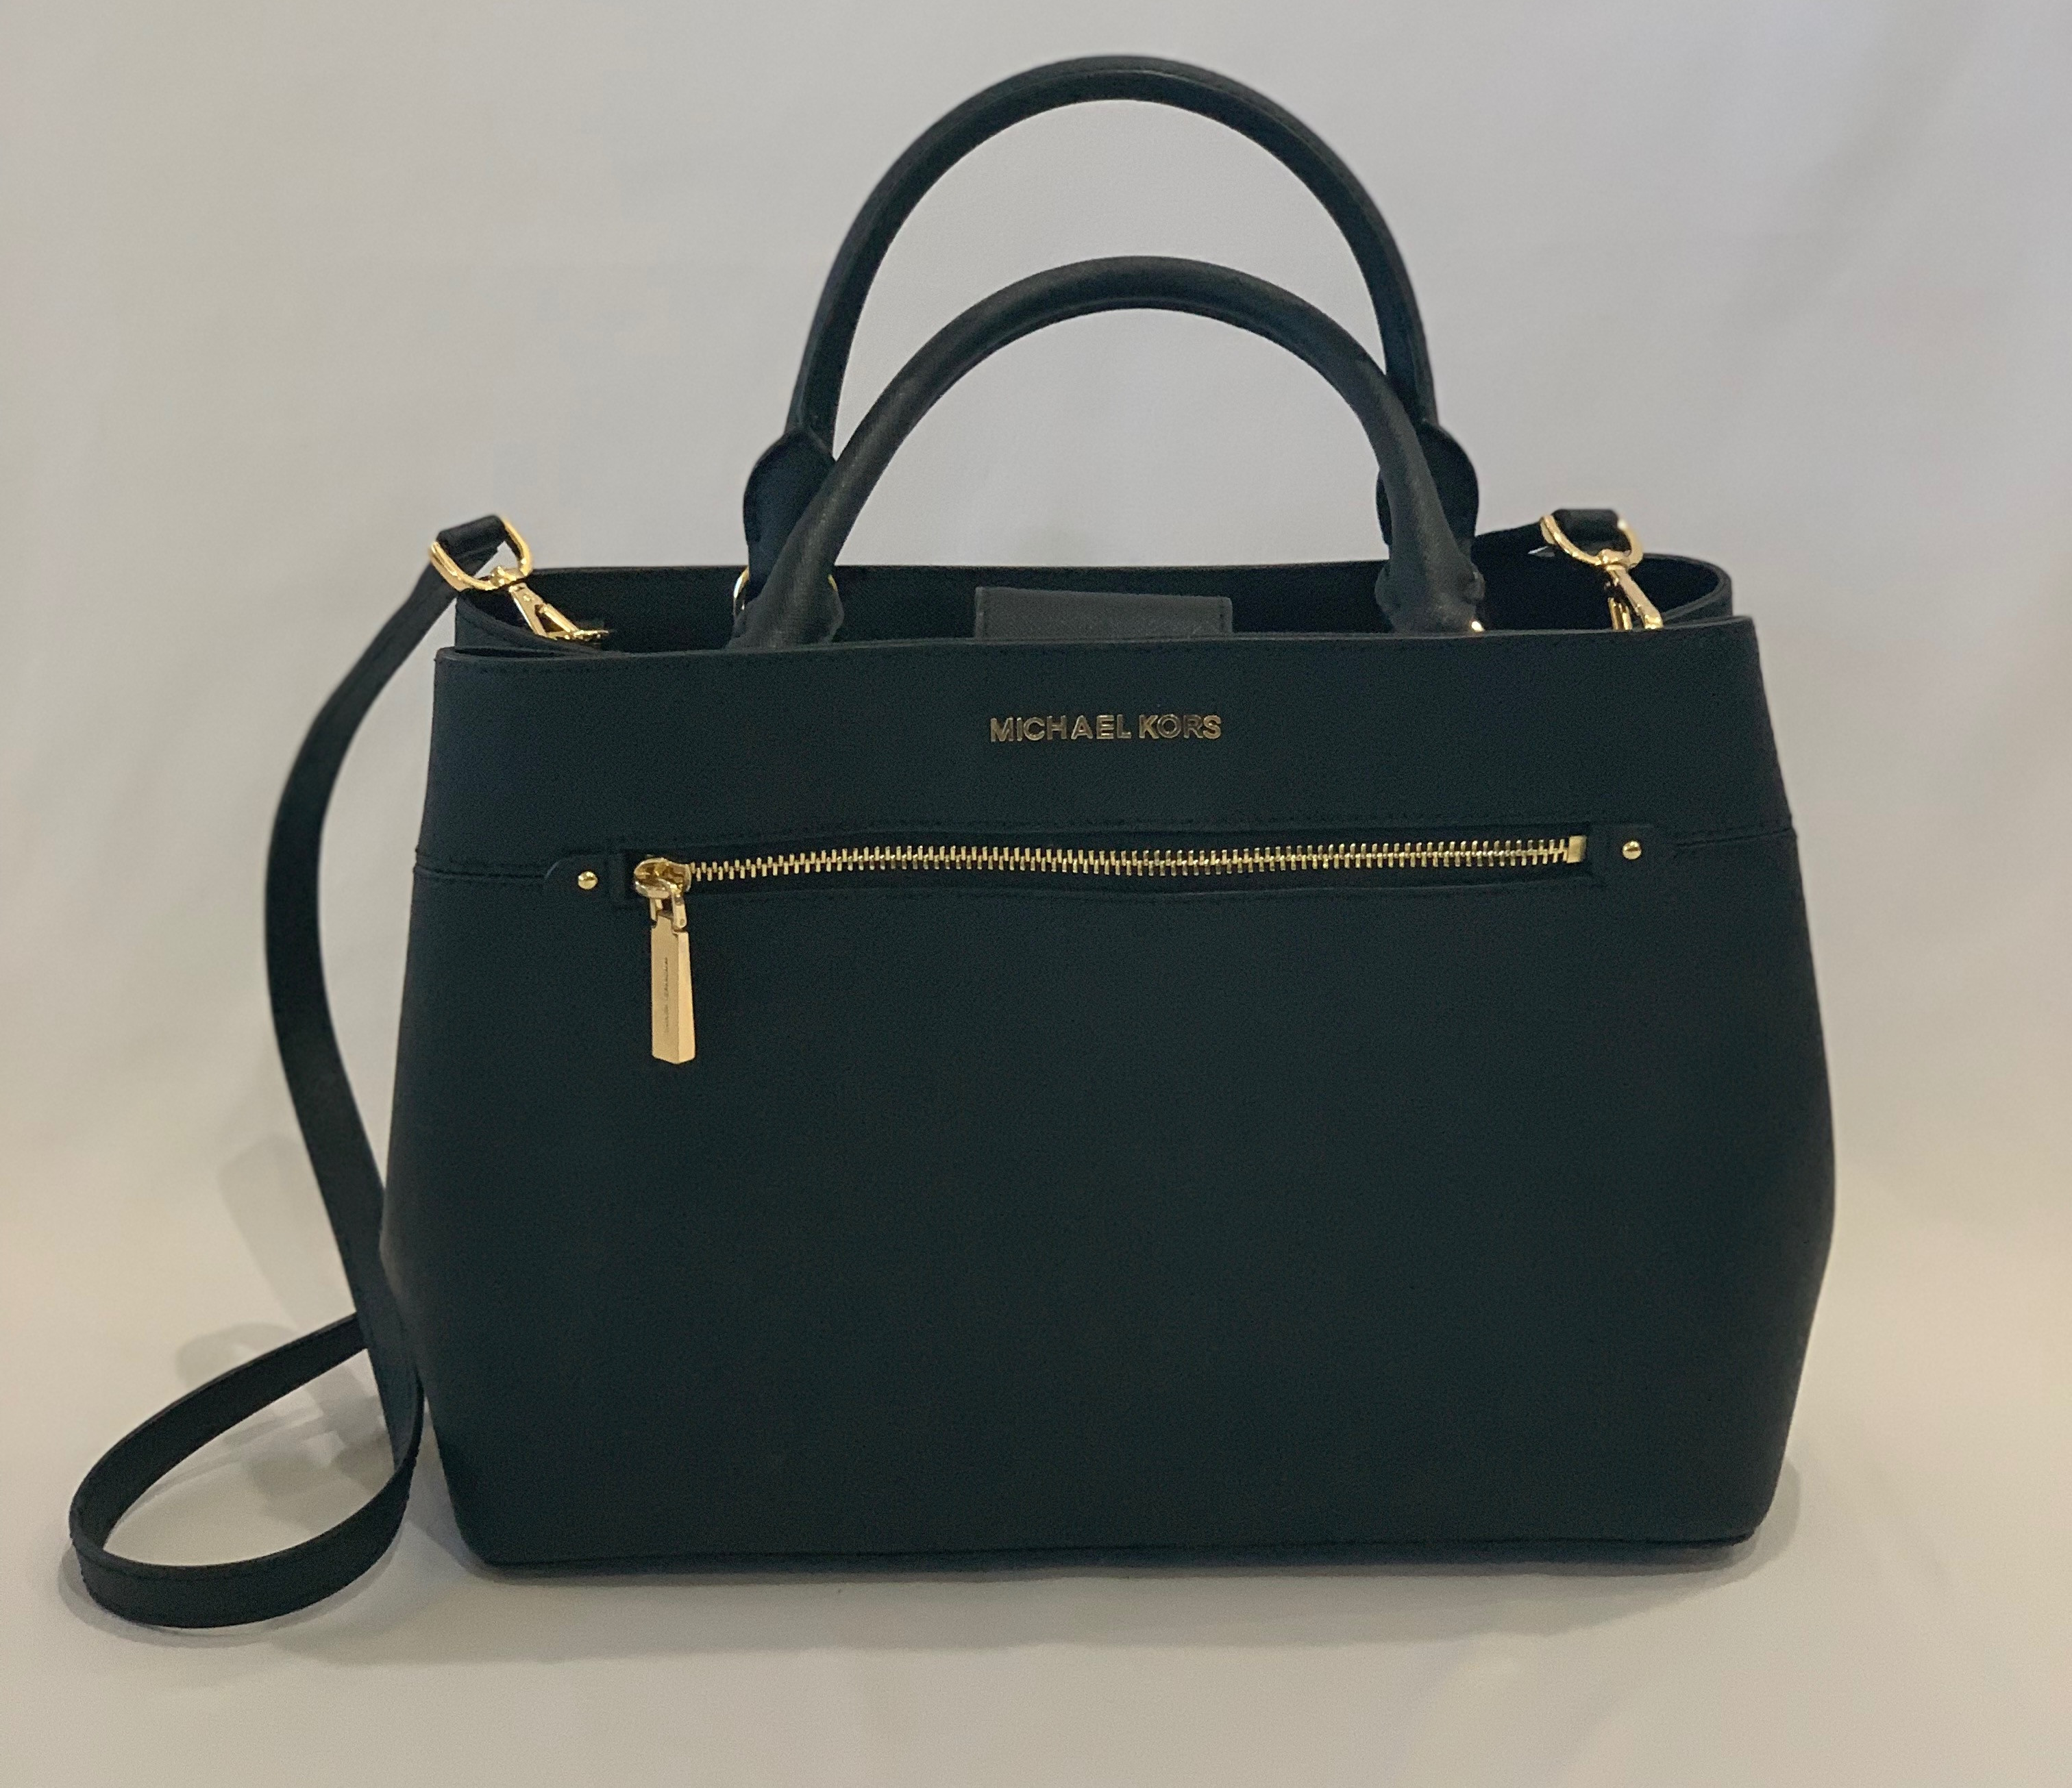 Michael Kors stiff black leather handbag